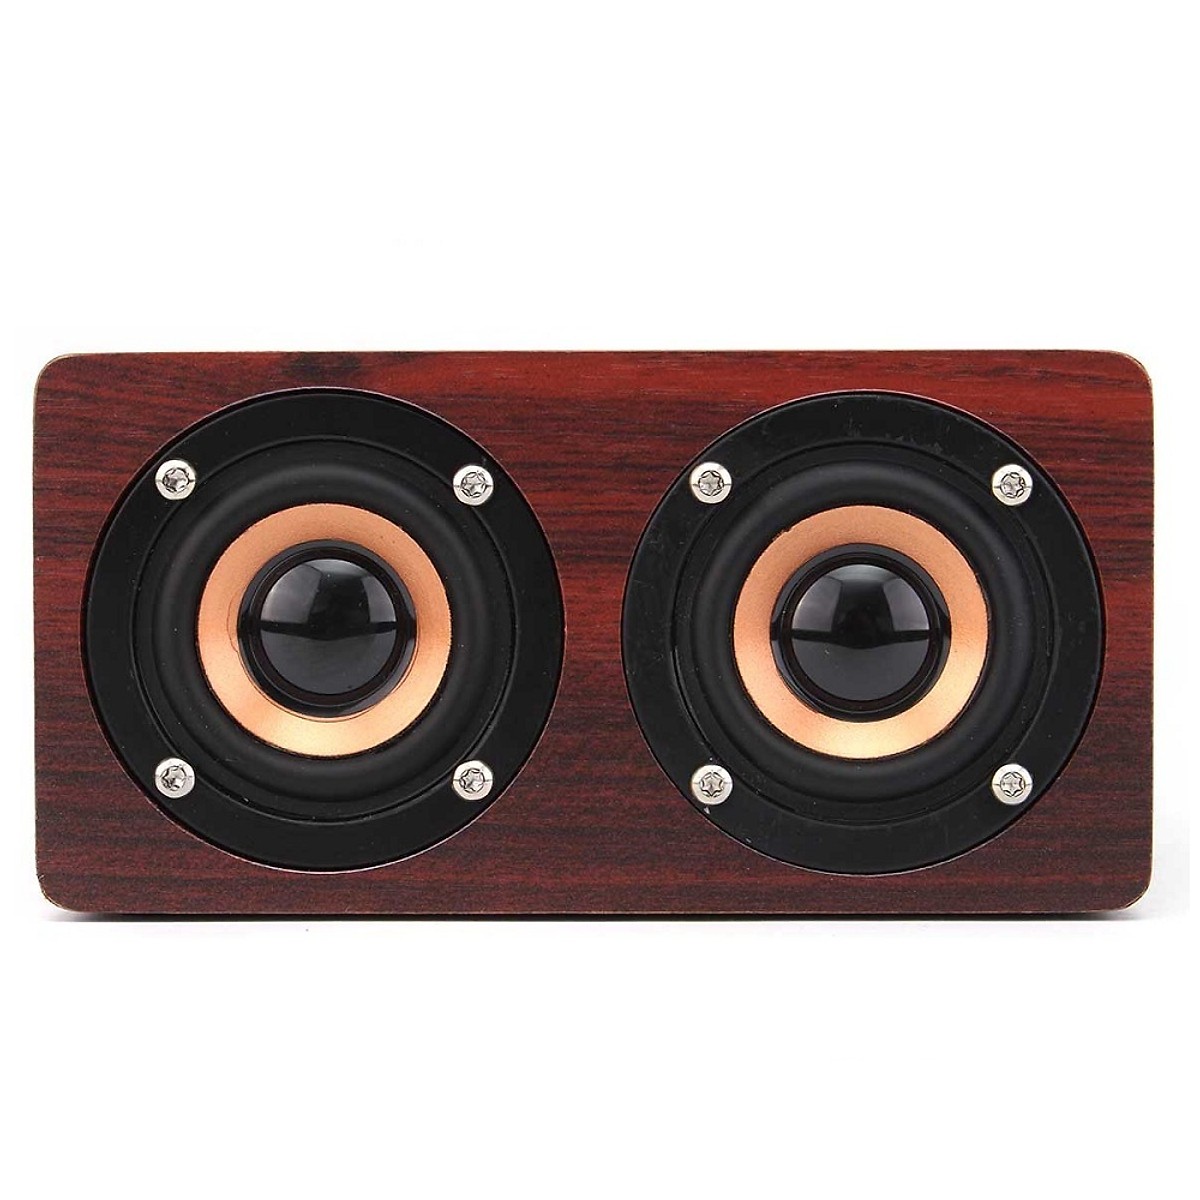 Loa Bluetooth vân gỗ HIFI Stereo Speaker